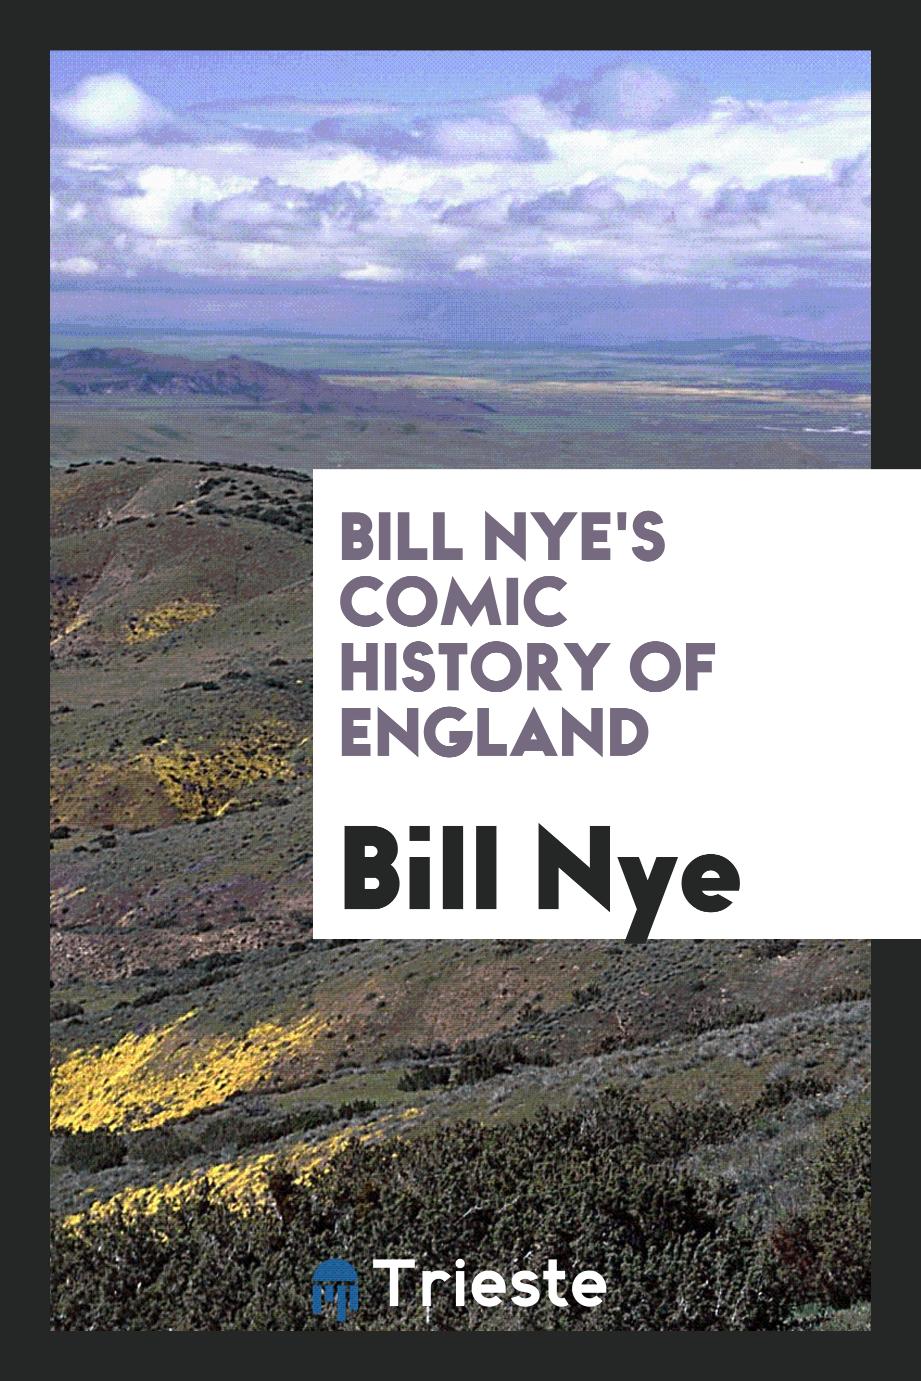 Bill Nye's comic history of England